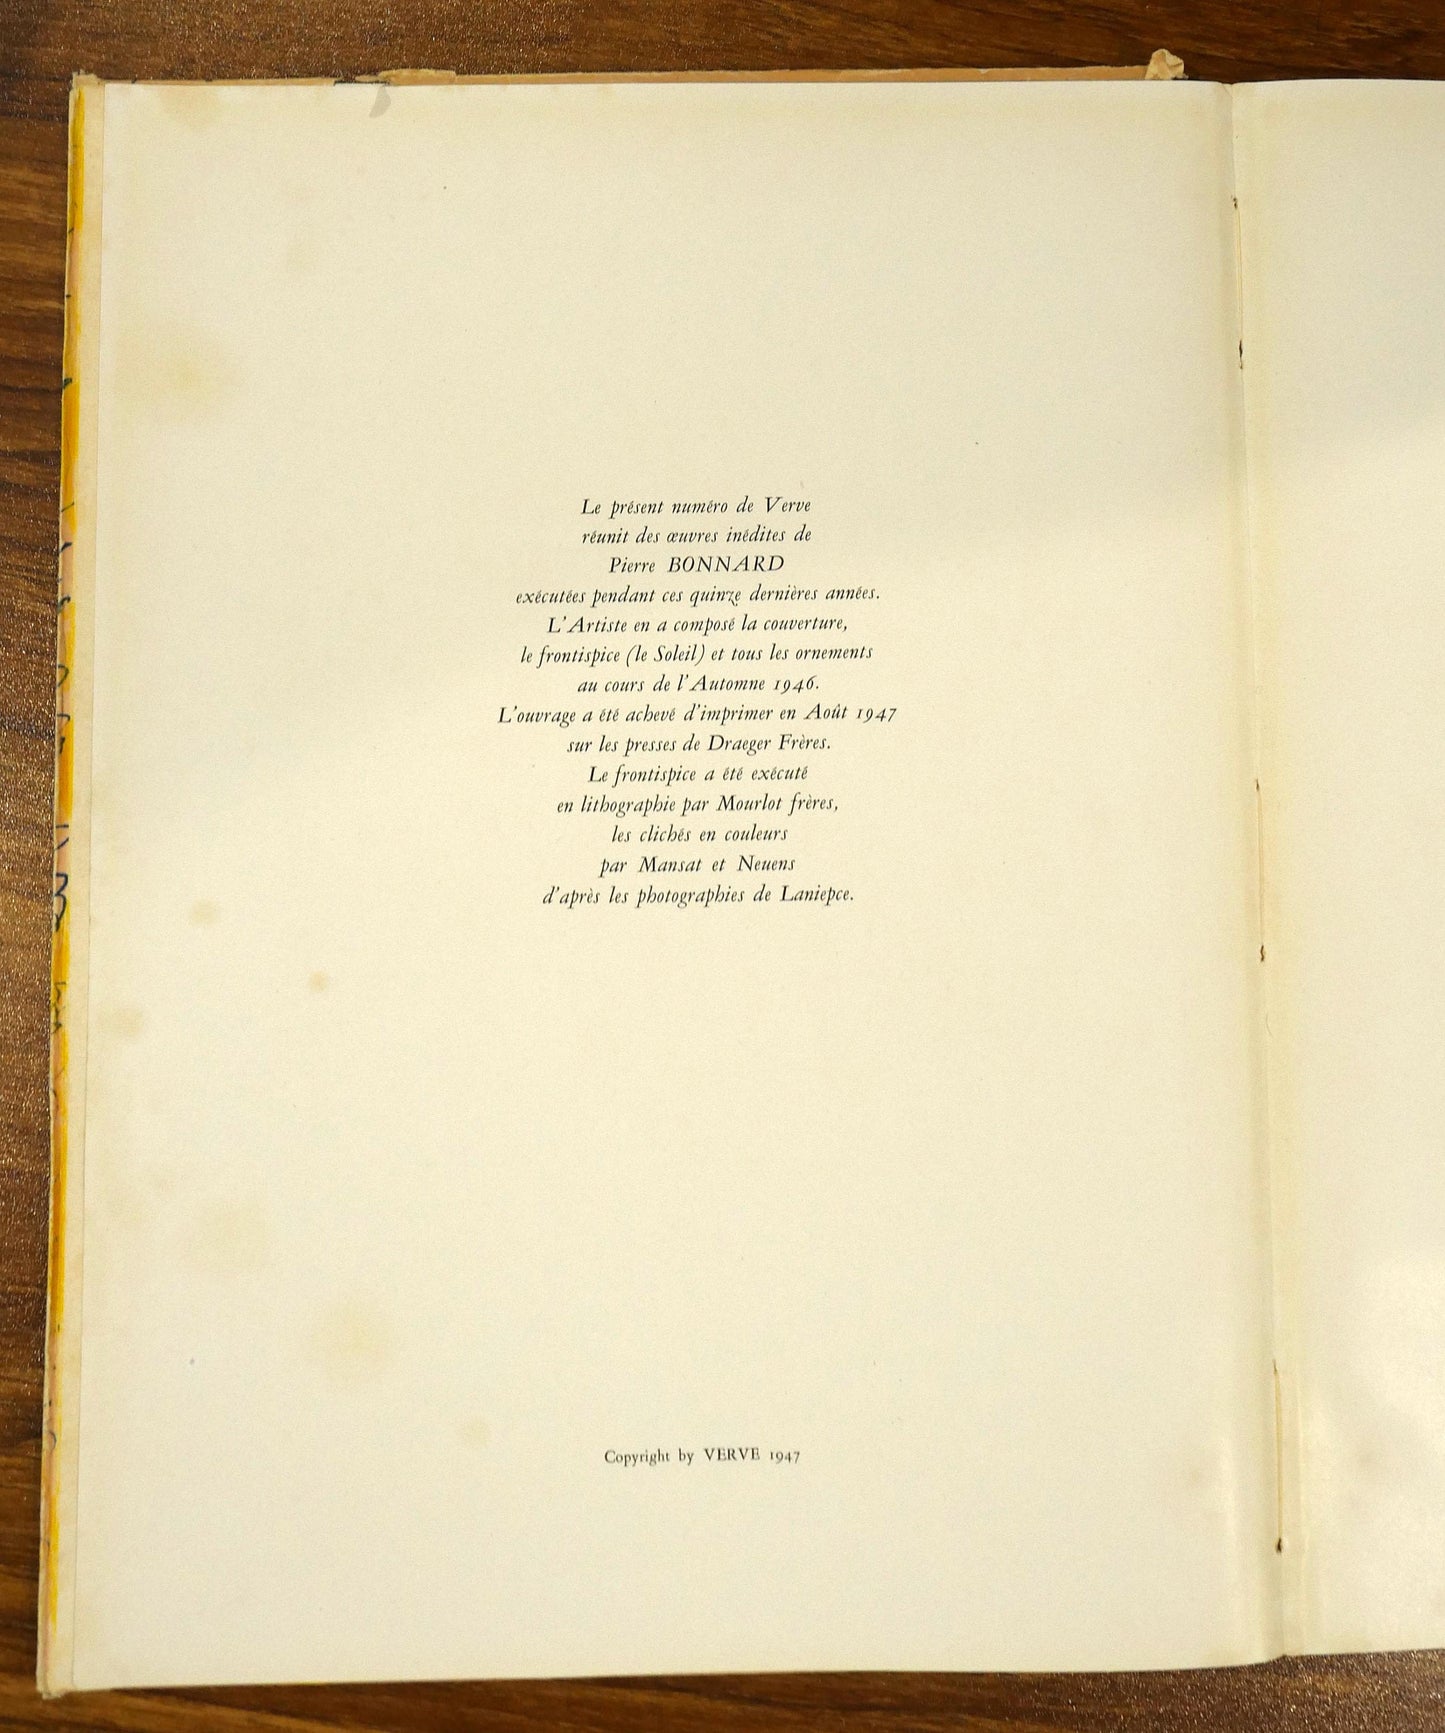 Pierre Bonnard Verve Vol 5 No 17-18 1947 includes the Le Soleil Original Lithograph edited by Teriade